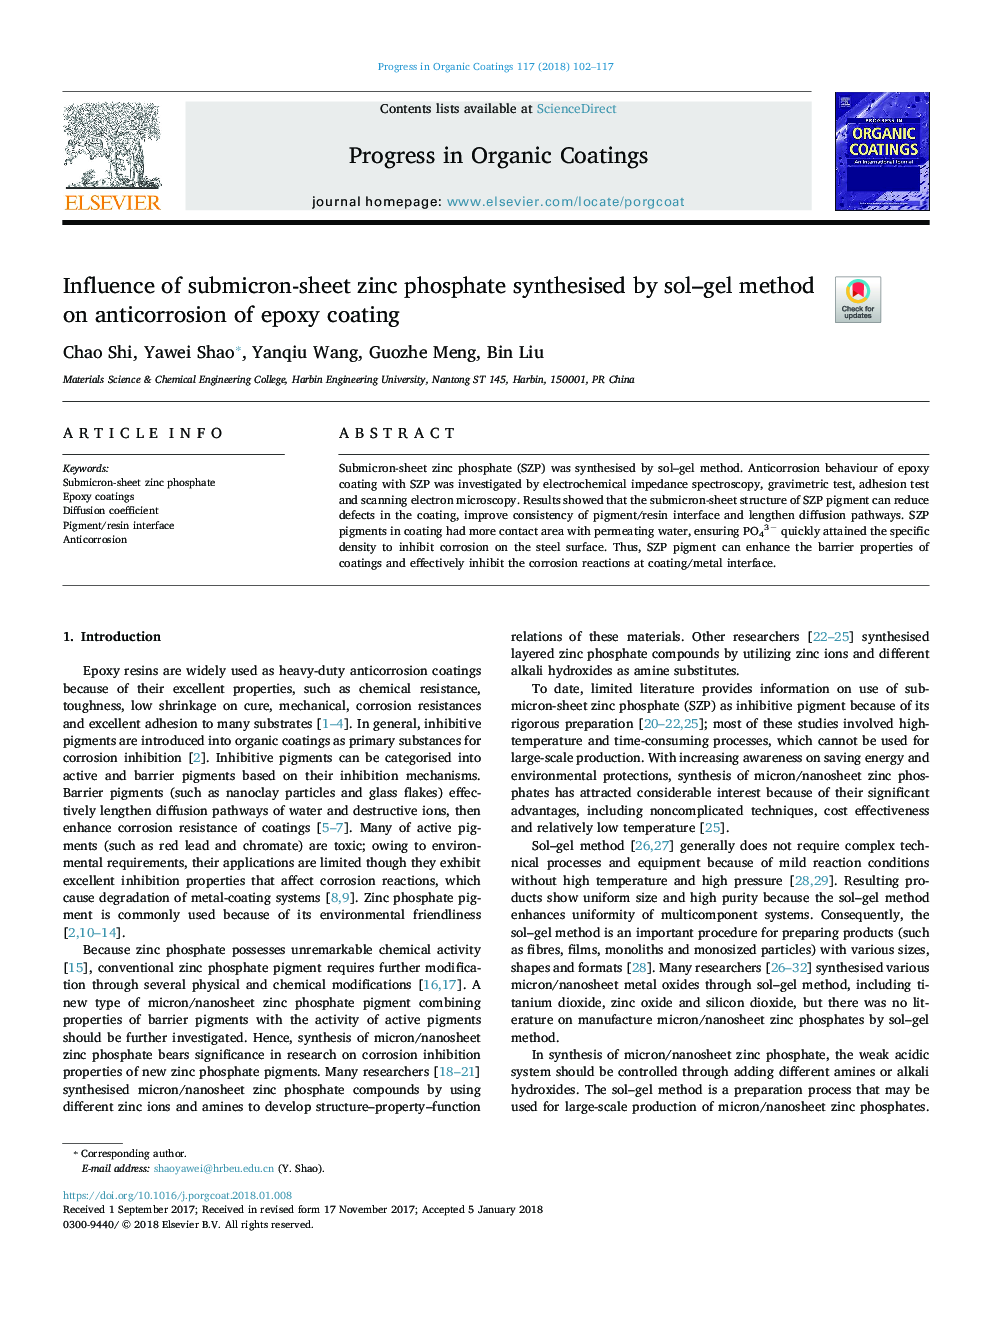 Influence of submicron-sheet zinc phosphate synthesised by sol-gel method on anticorrosion of epoxy coating